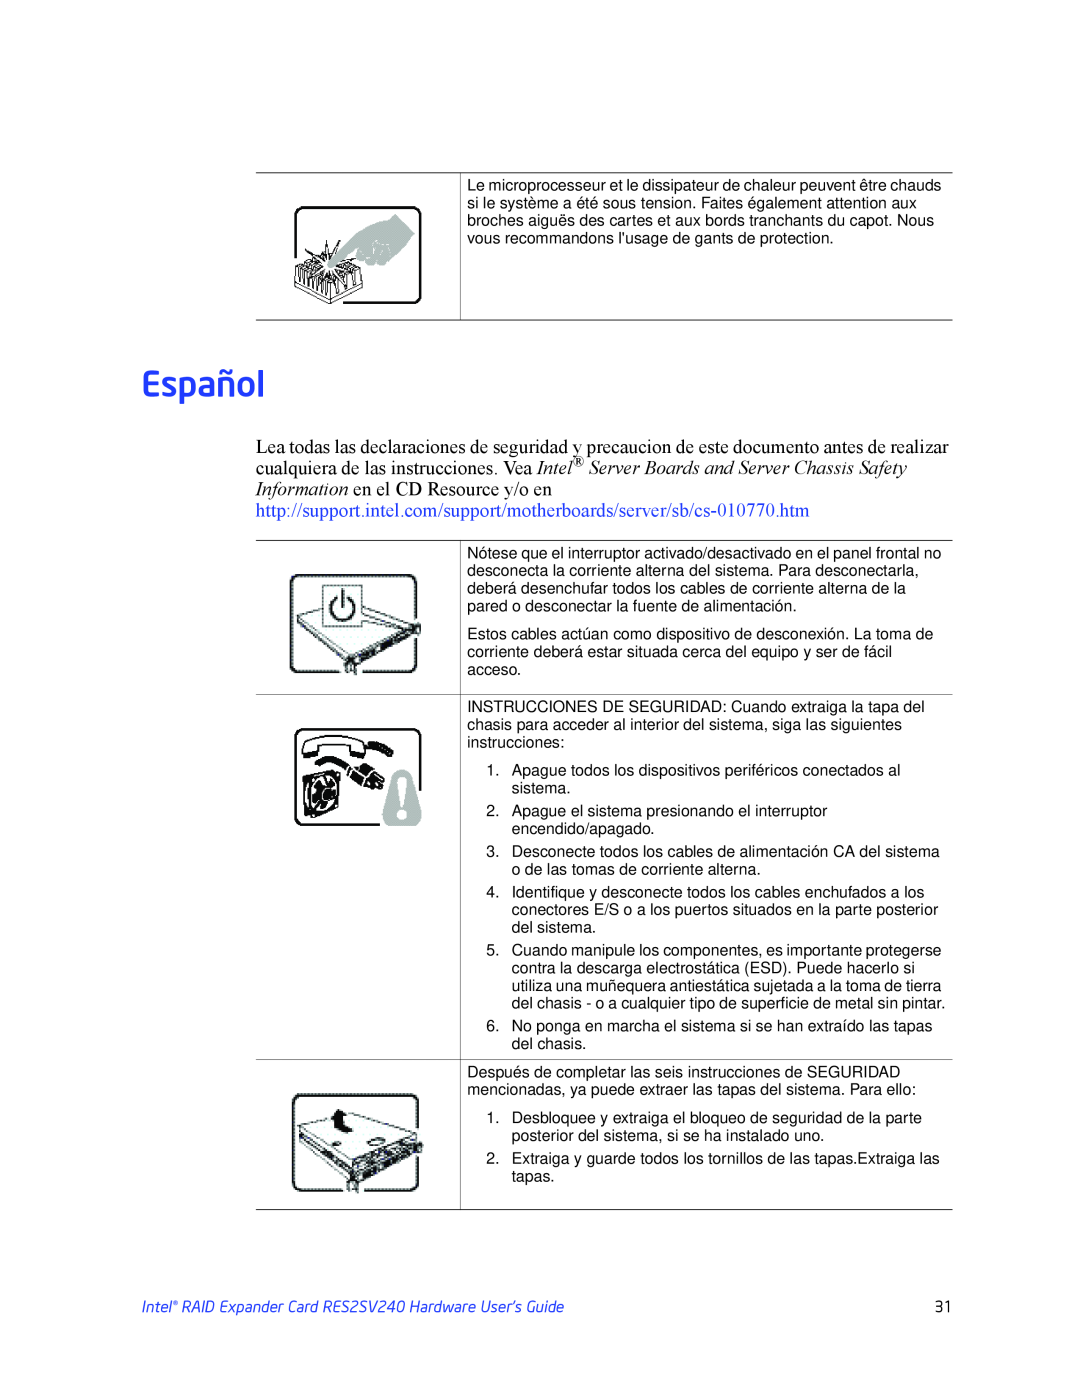 Intel RES2SV240 manual Español 